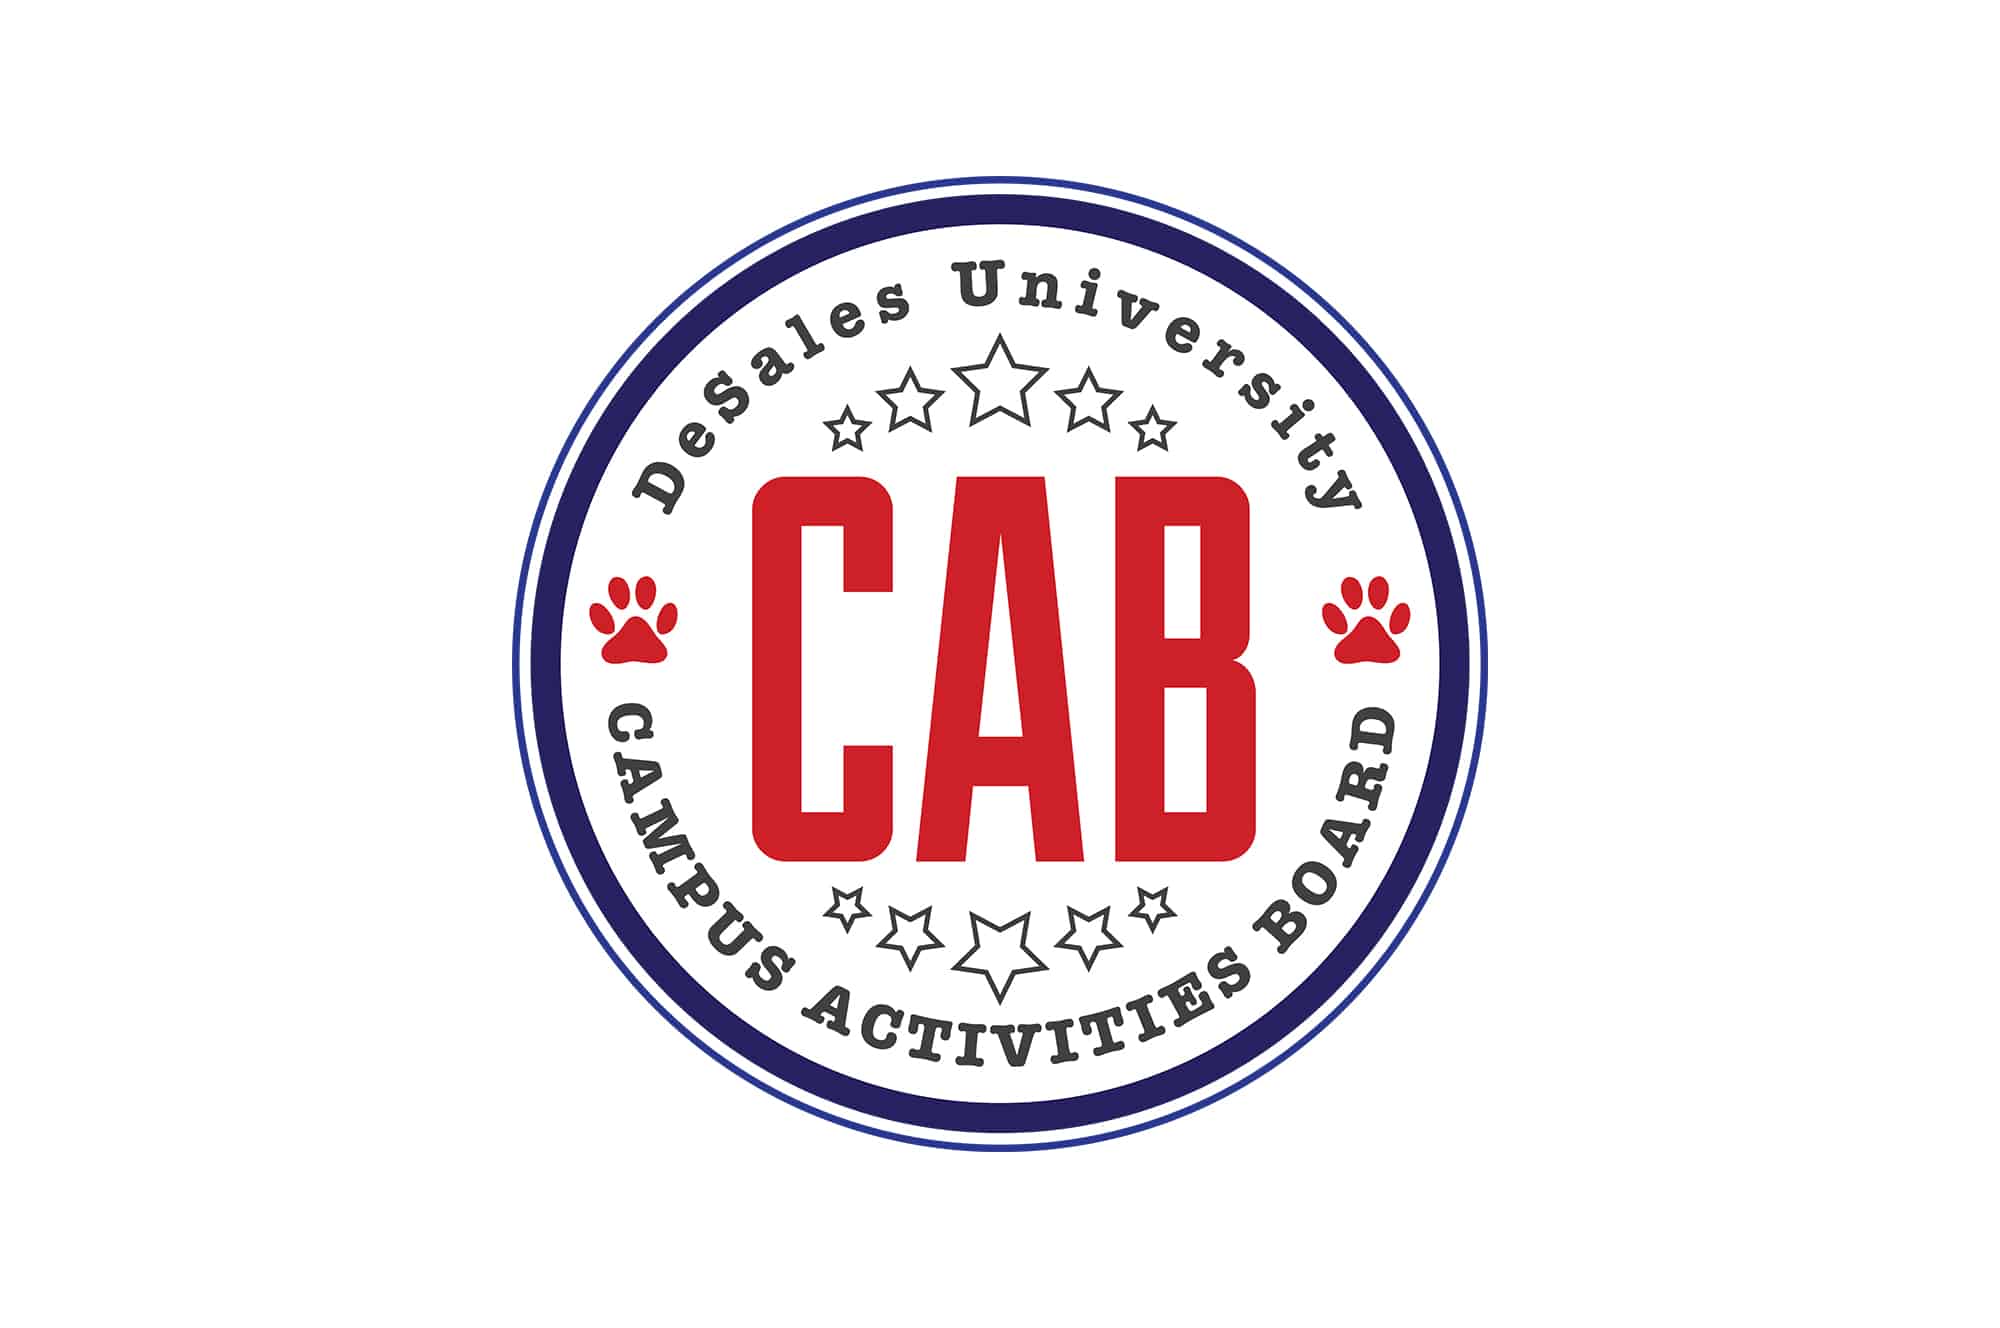 logo design for desales university campus activities board